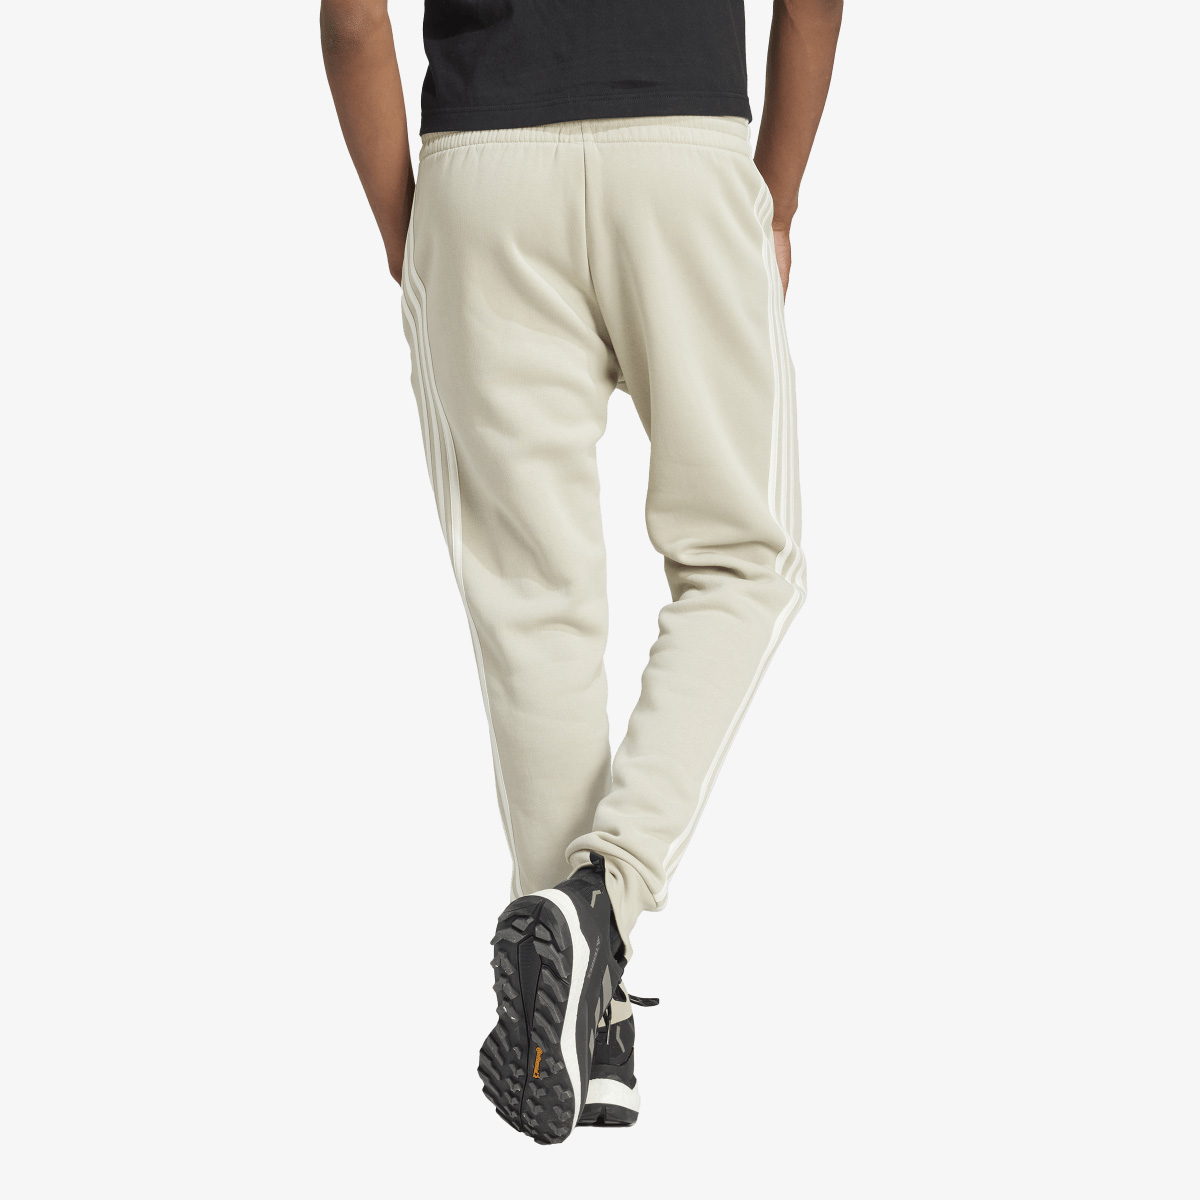 Kalhoty Essentials Fleece 3-Stripes Tapered Cuff 